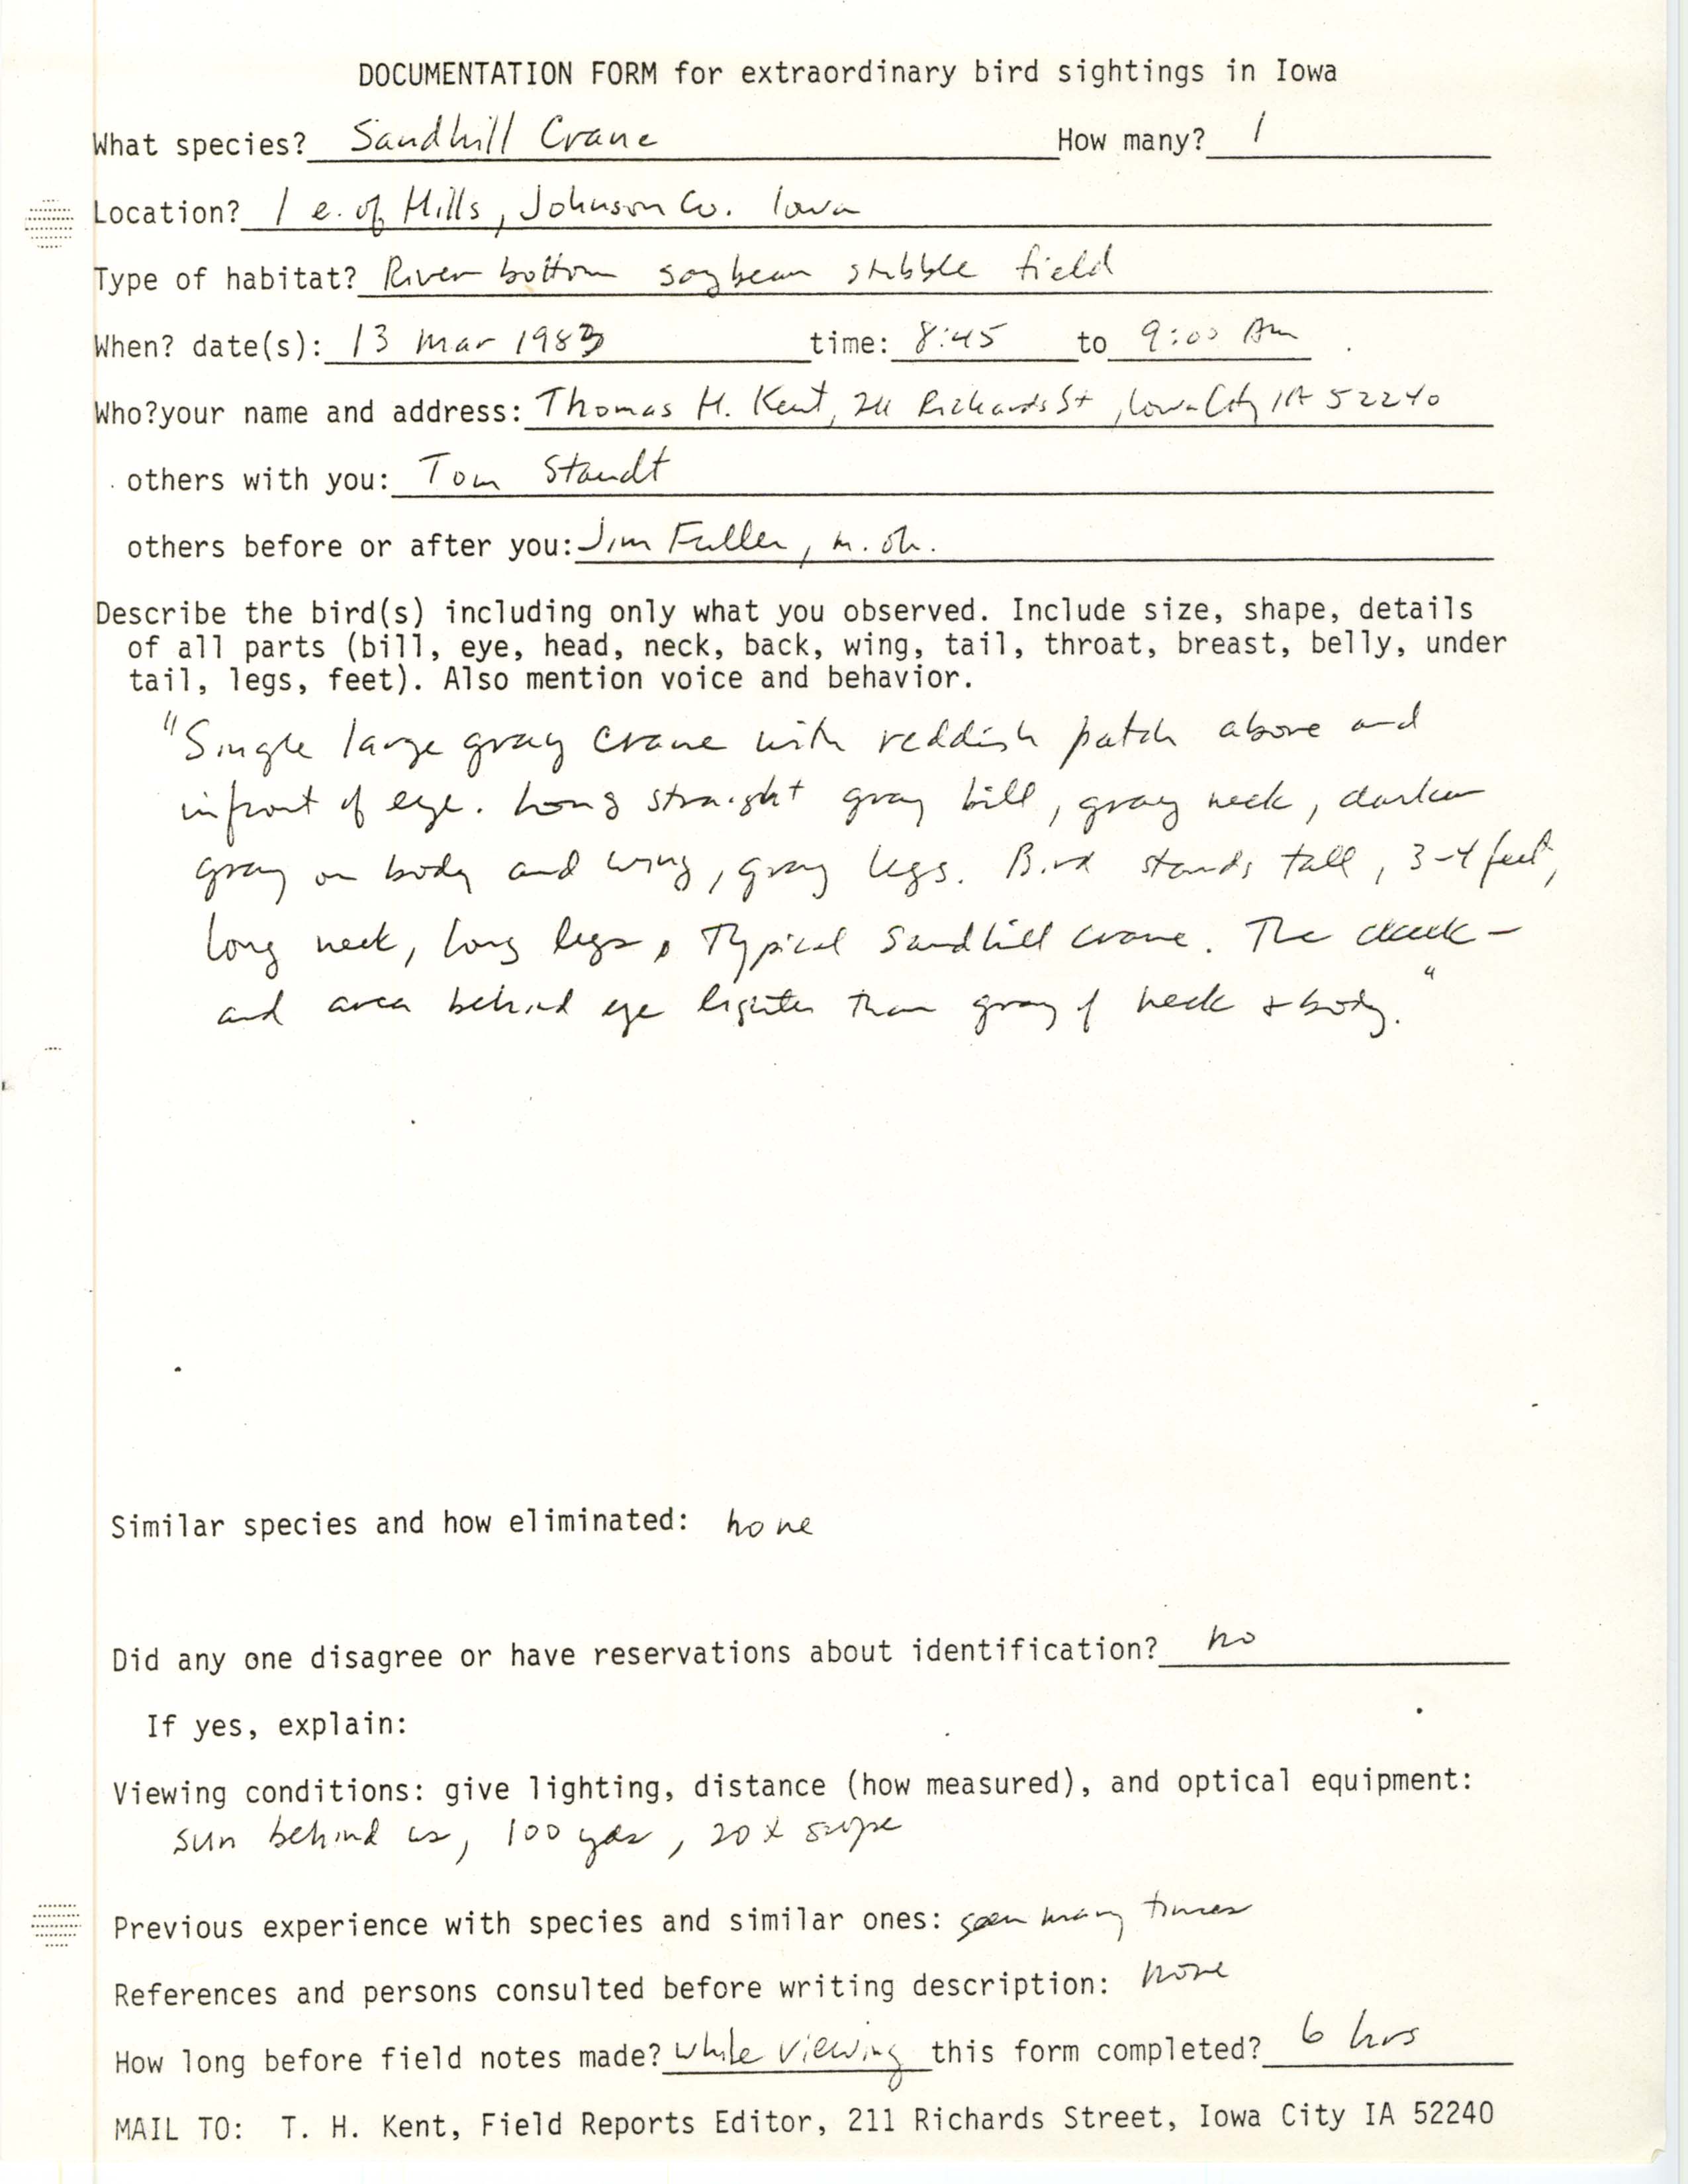 Rare bird documentation form for Sandhill Crane east of Hills, 1983